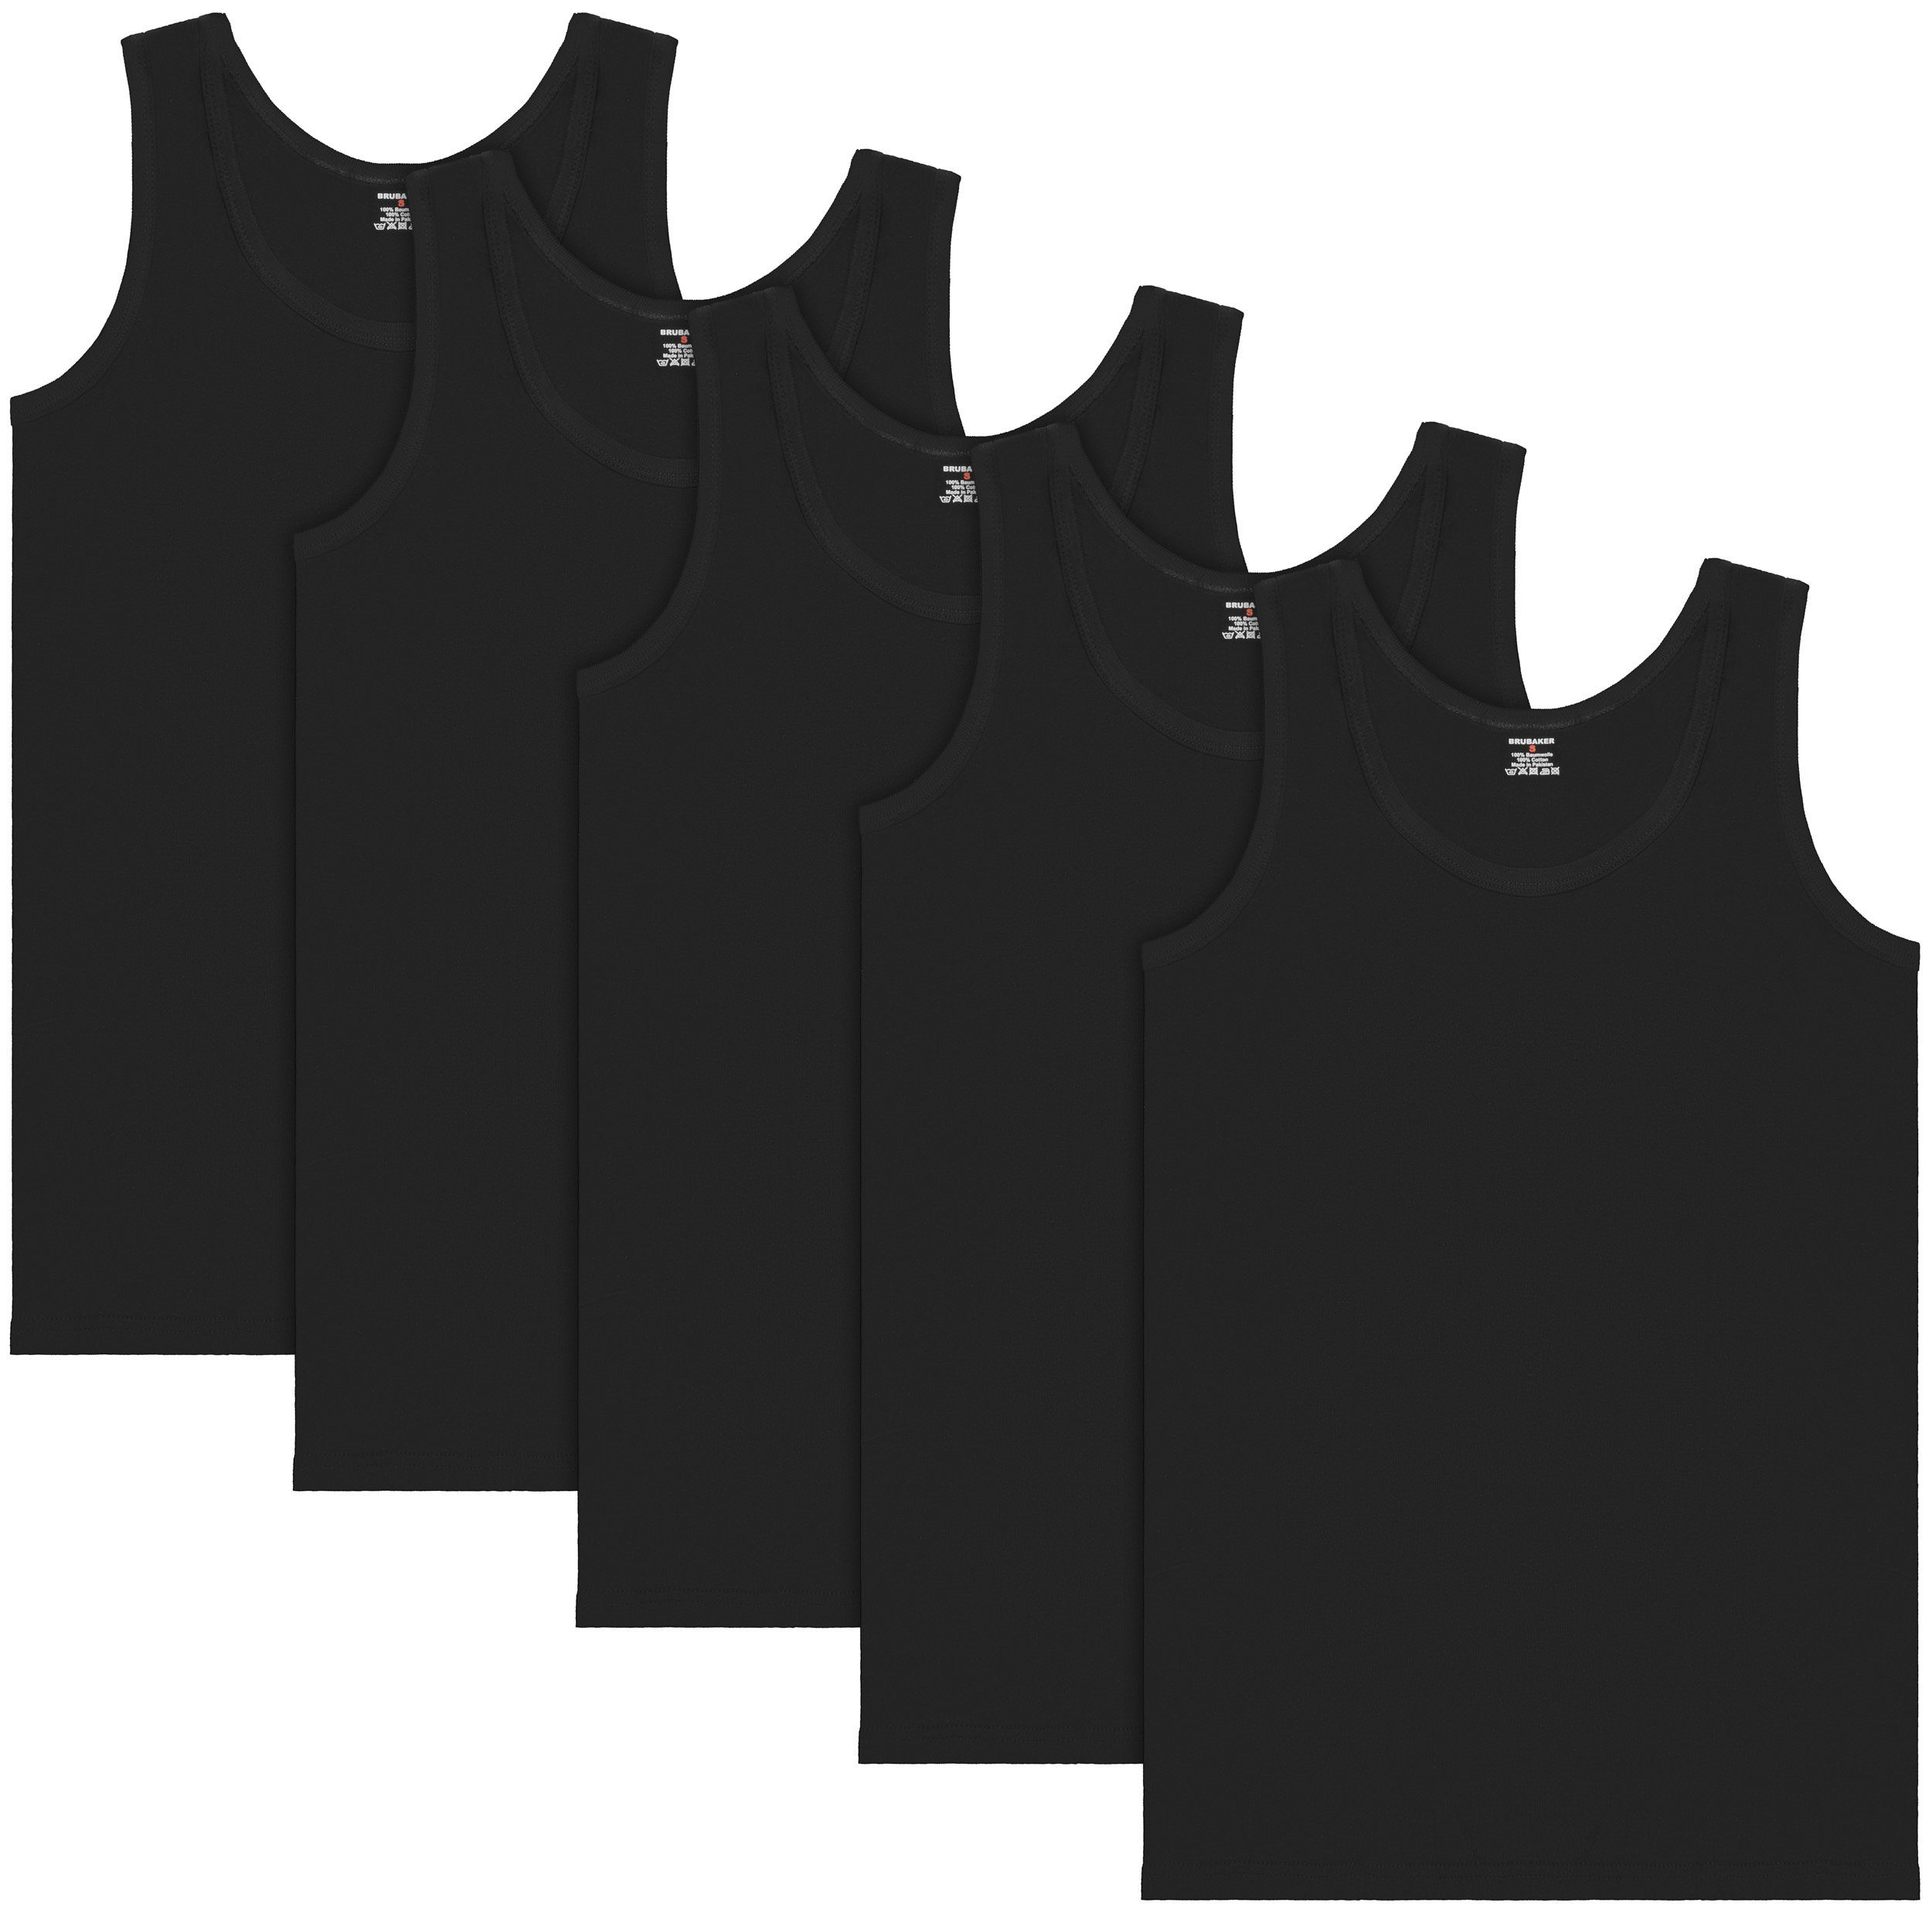 BRUBAKER Tanktop Classic Herren Unterhemd Tank Top (5er-Pack) Schlichtes Basic Achselshirt aus hochwertiger Baumwolle (glatt), Extra Lang, Nahtlos Schwarz | Tanktops